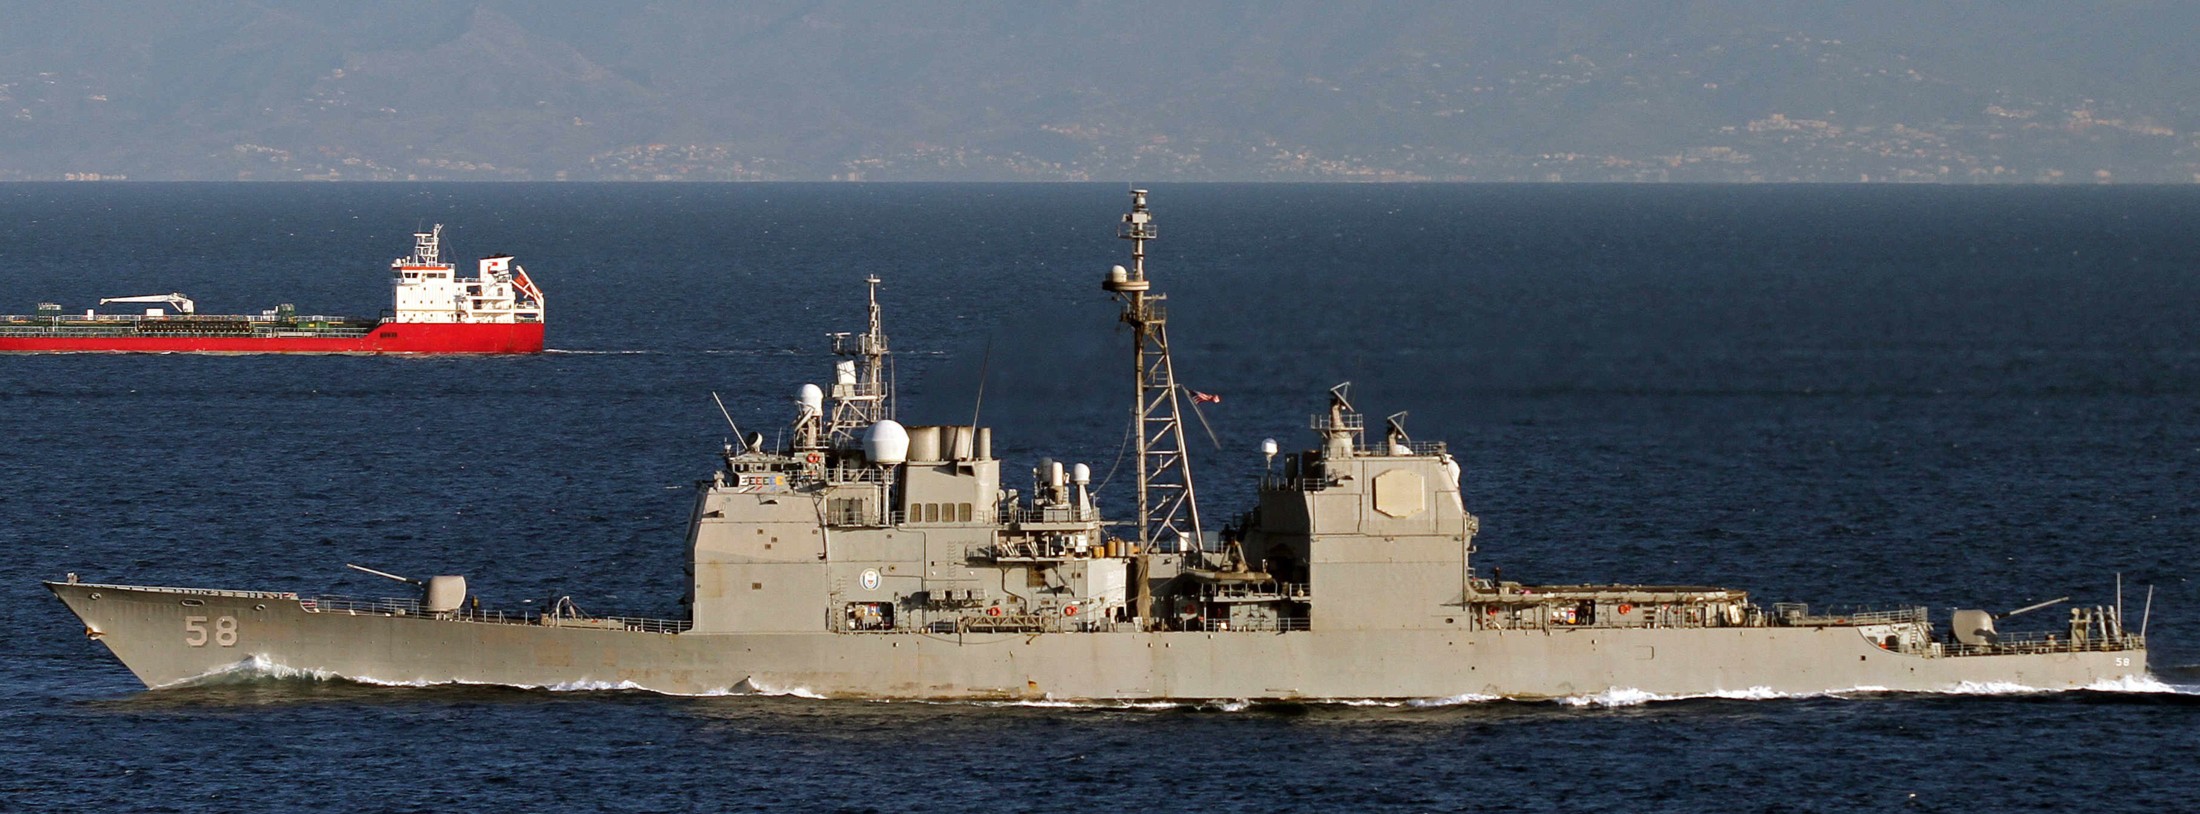 cg-58 uss philippine sea ticonderoga class guided missile cruiser aegis us navy strait of gibraltar 45